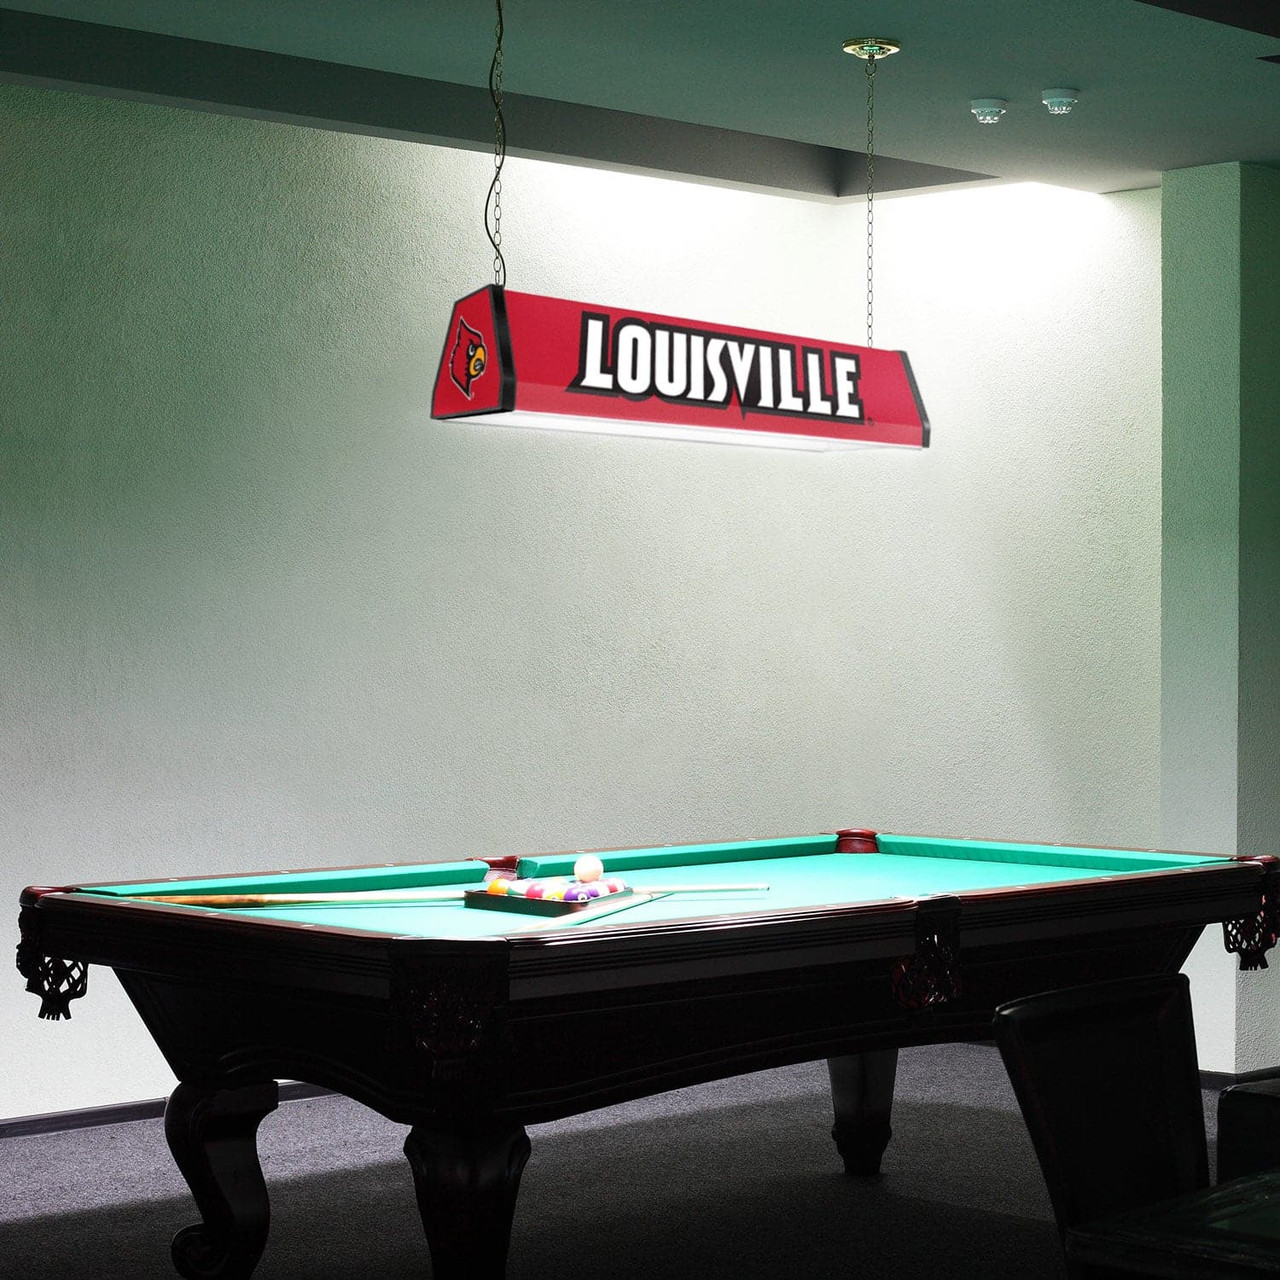 Louisville, Cardinals, University of, Standard, Billiard, Pool, Table Light, 2-Colors, Black, Red, Logo, NCLOUS-310-01A, NCLOUS-310-01B, The-Fan Brand, 687747755815